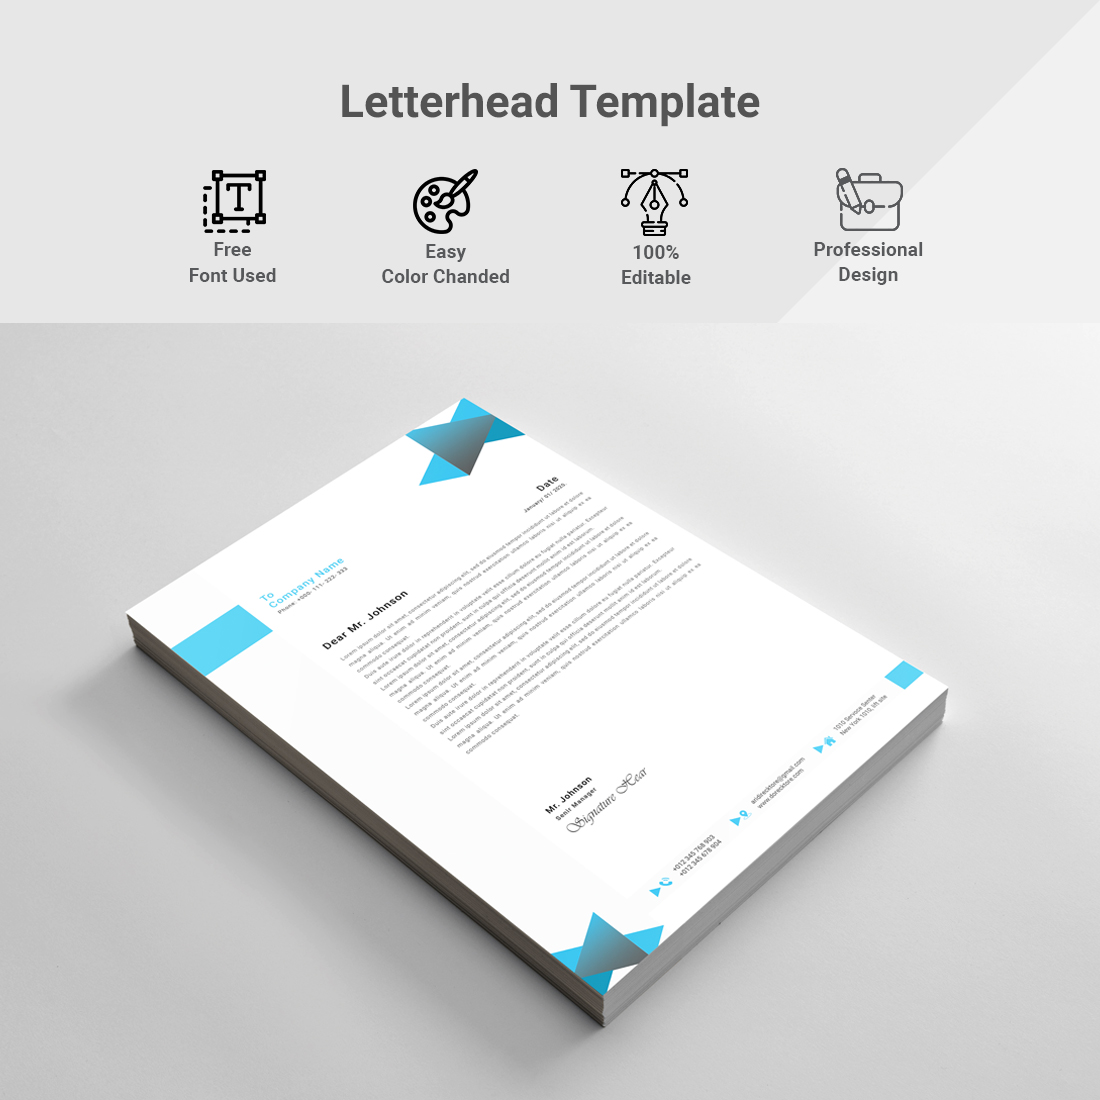 Letterhead Template Design preview image.